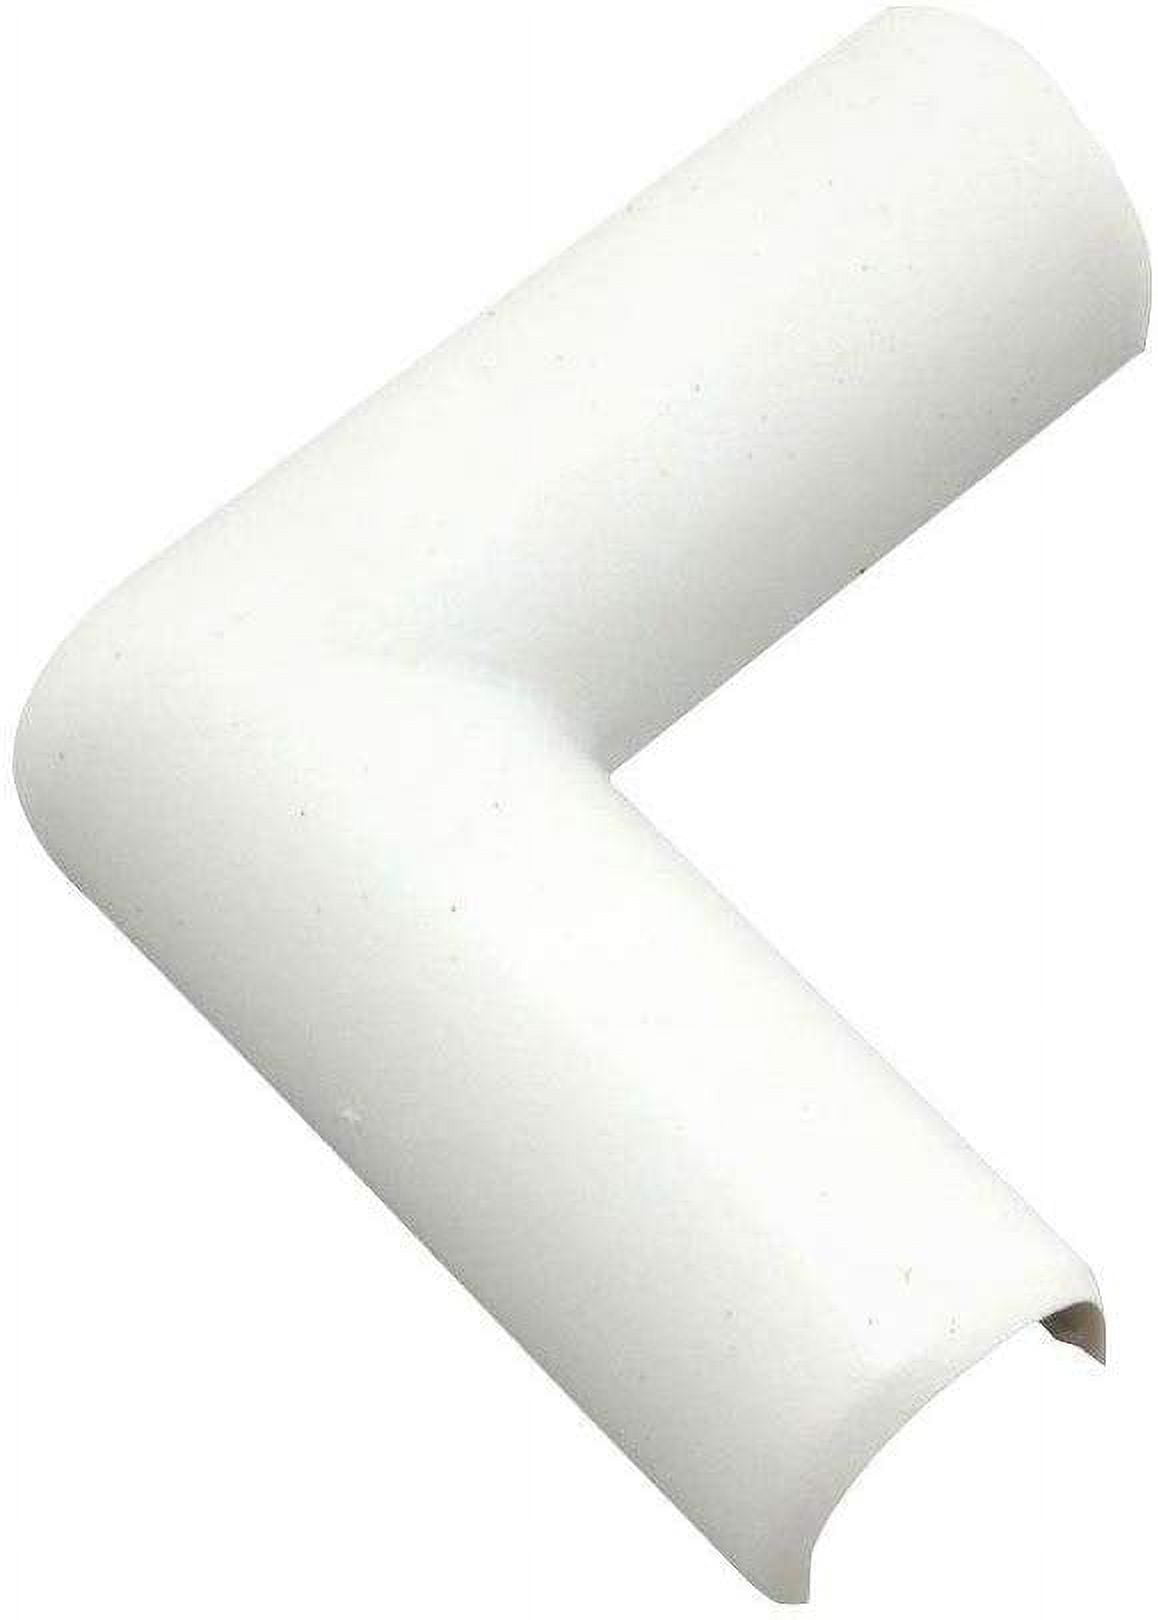 Legrand - Wiremold Company C16 Plastic Flat Elbow Cord Cover